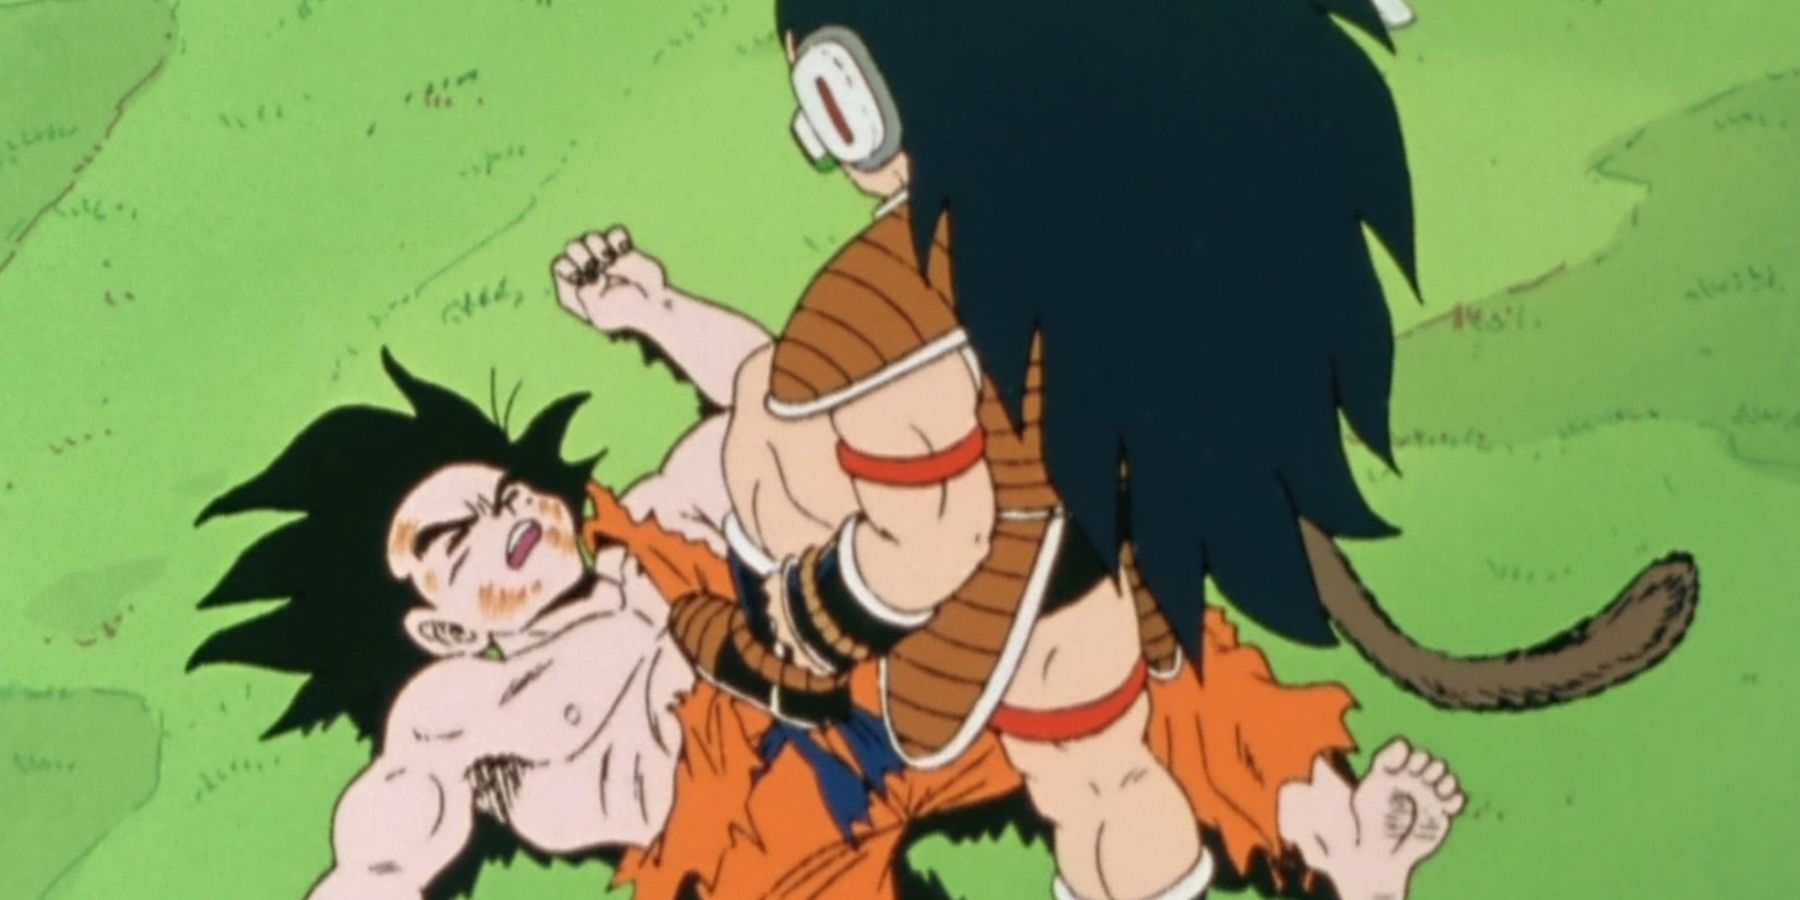 Raditz stepping on Goku in Dragon Ball.